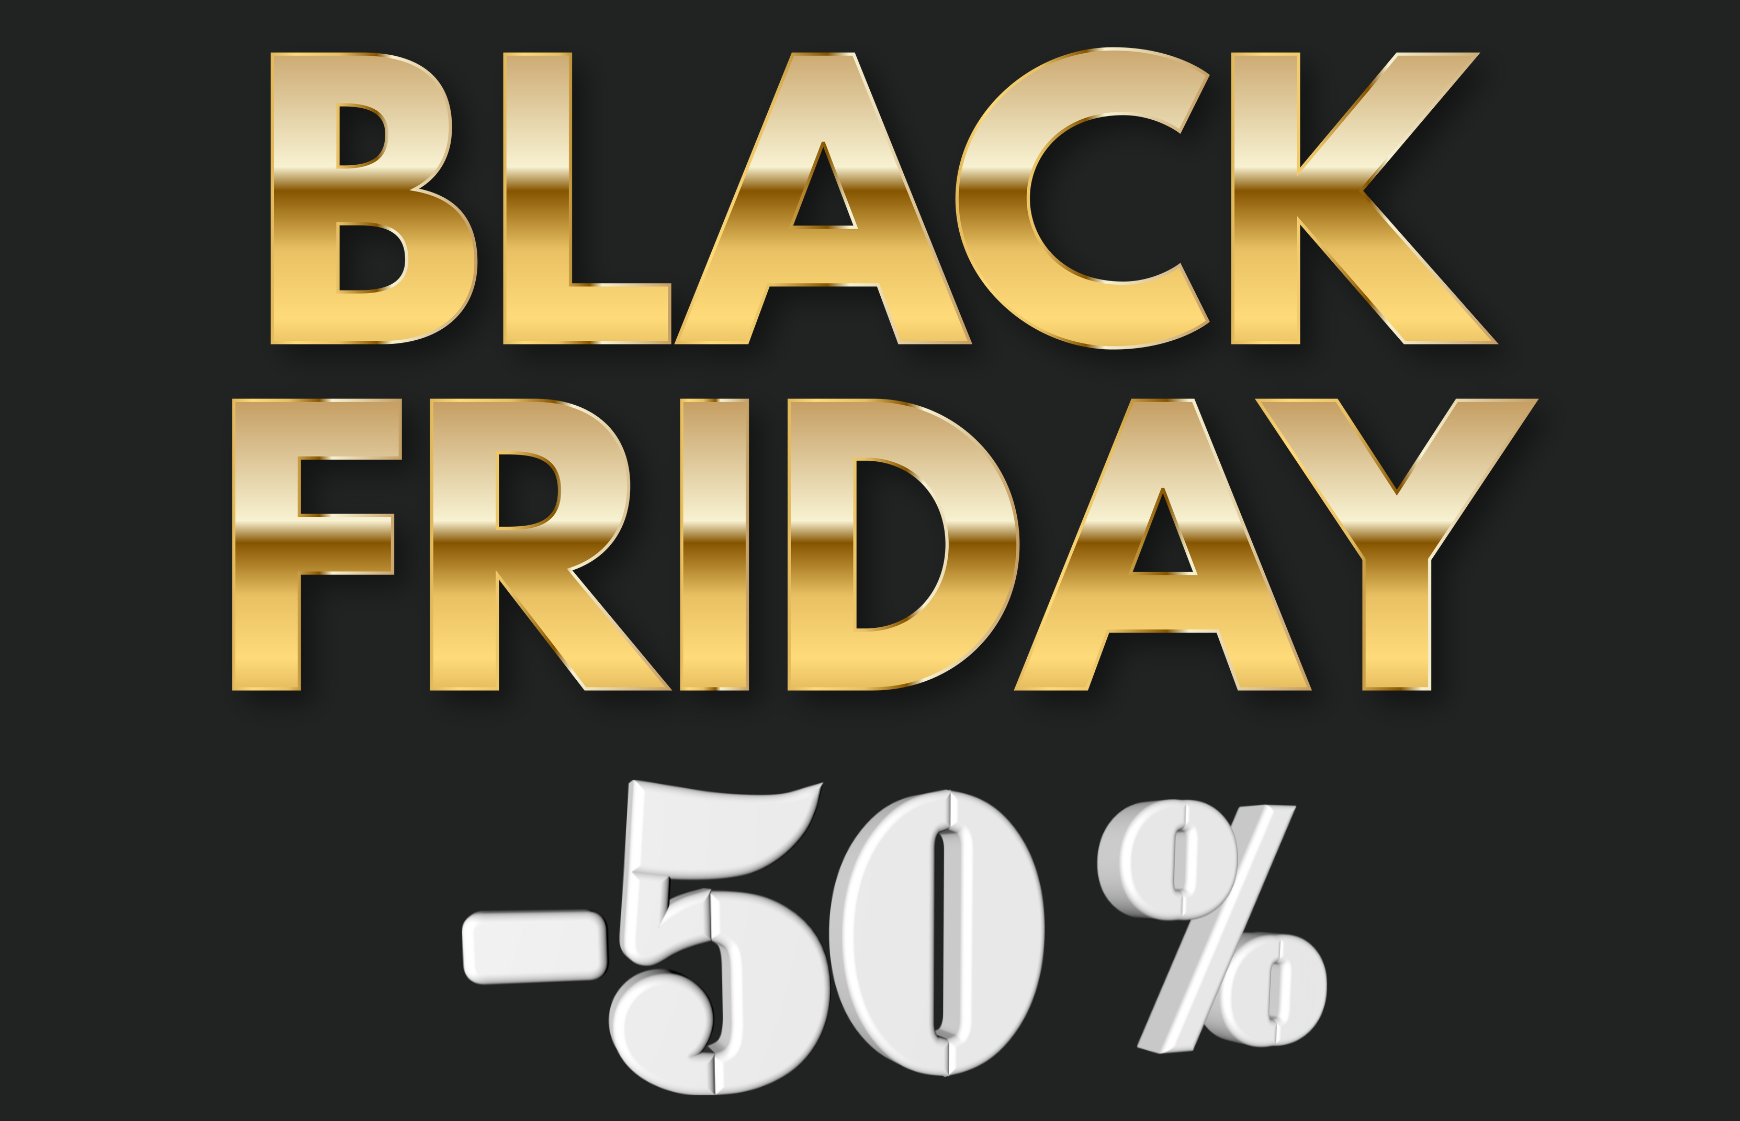 BLACK FRIDAY: -50%